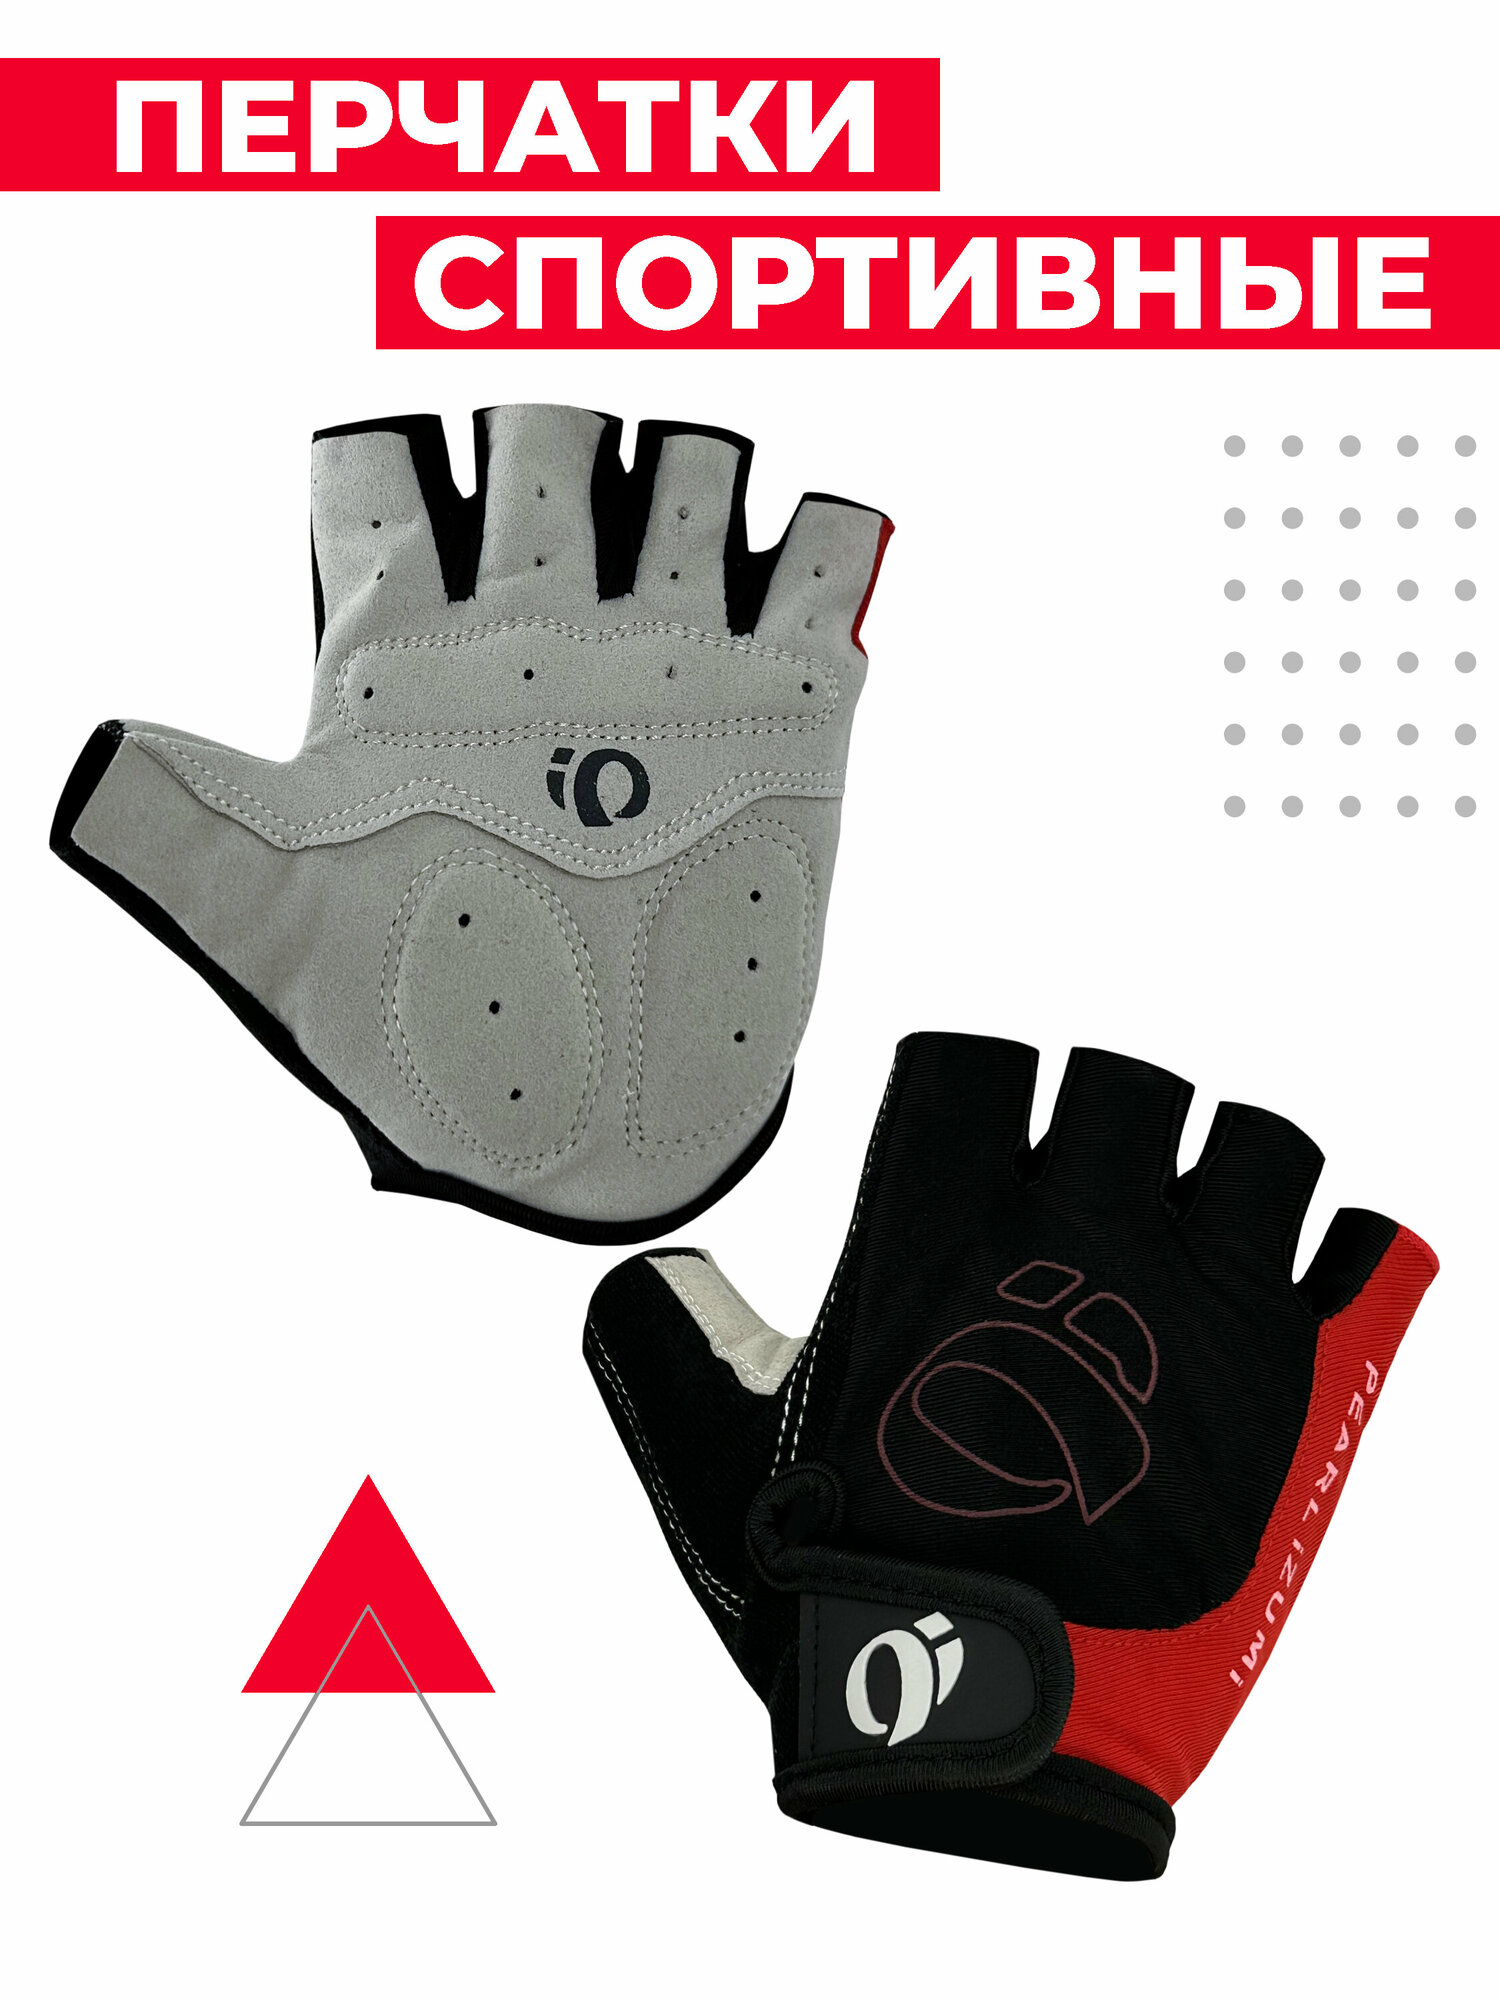 Перчатки для фитнеса Boomshakalaka, цвет черно-серо-красный, размер XXL, обхват ладони 250-270 мм.